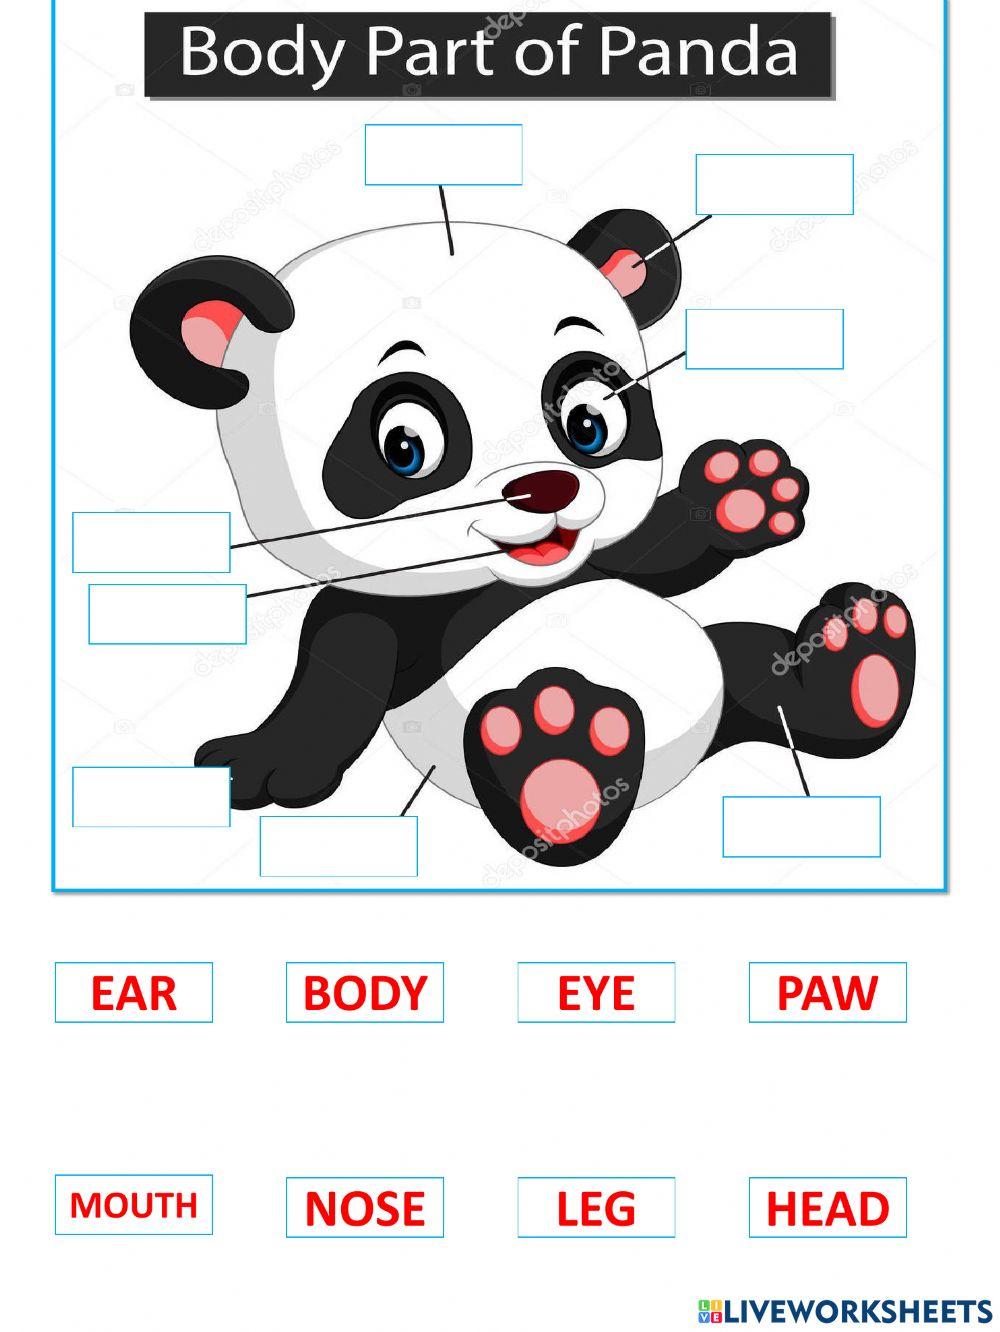 Body parts panda